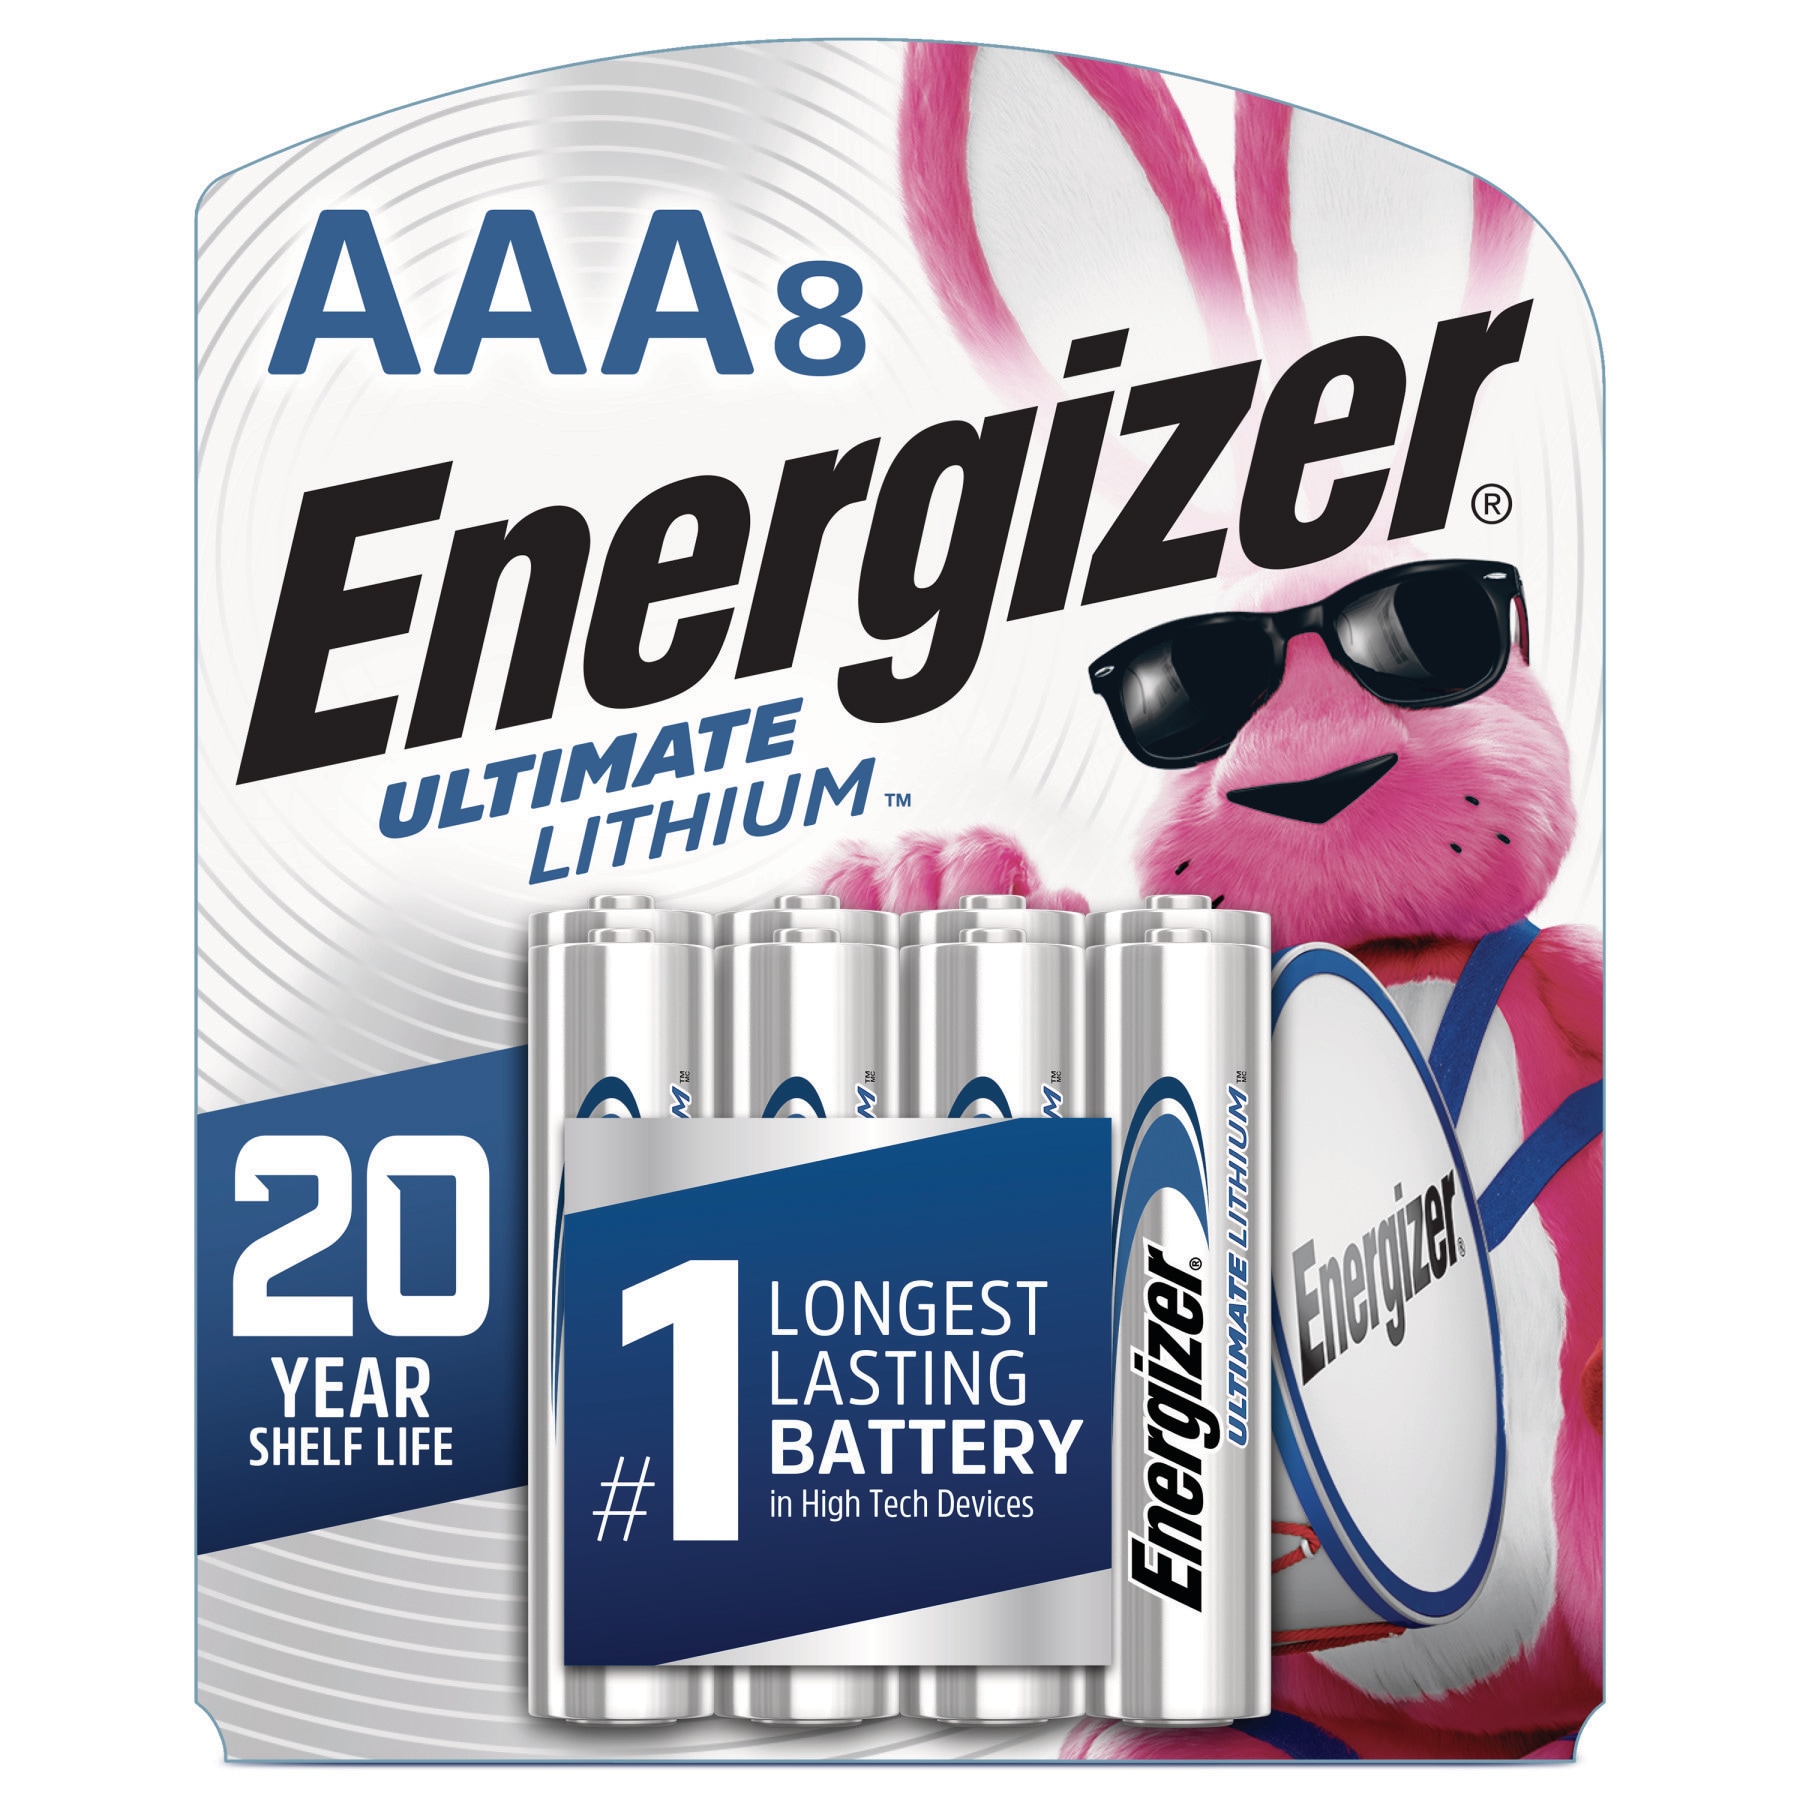 Jak dlouho vydrží lithiové baterie AAA?